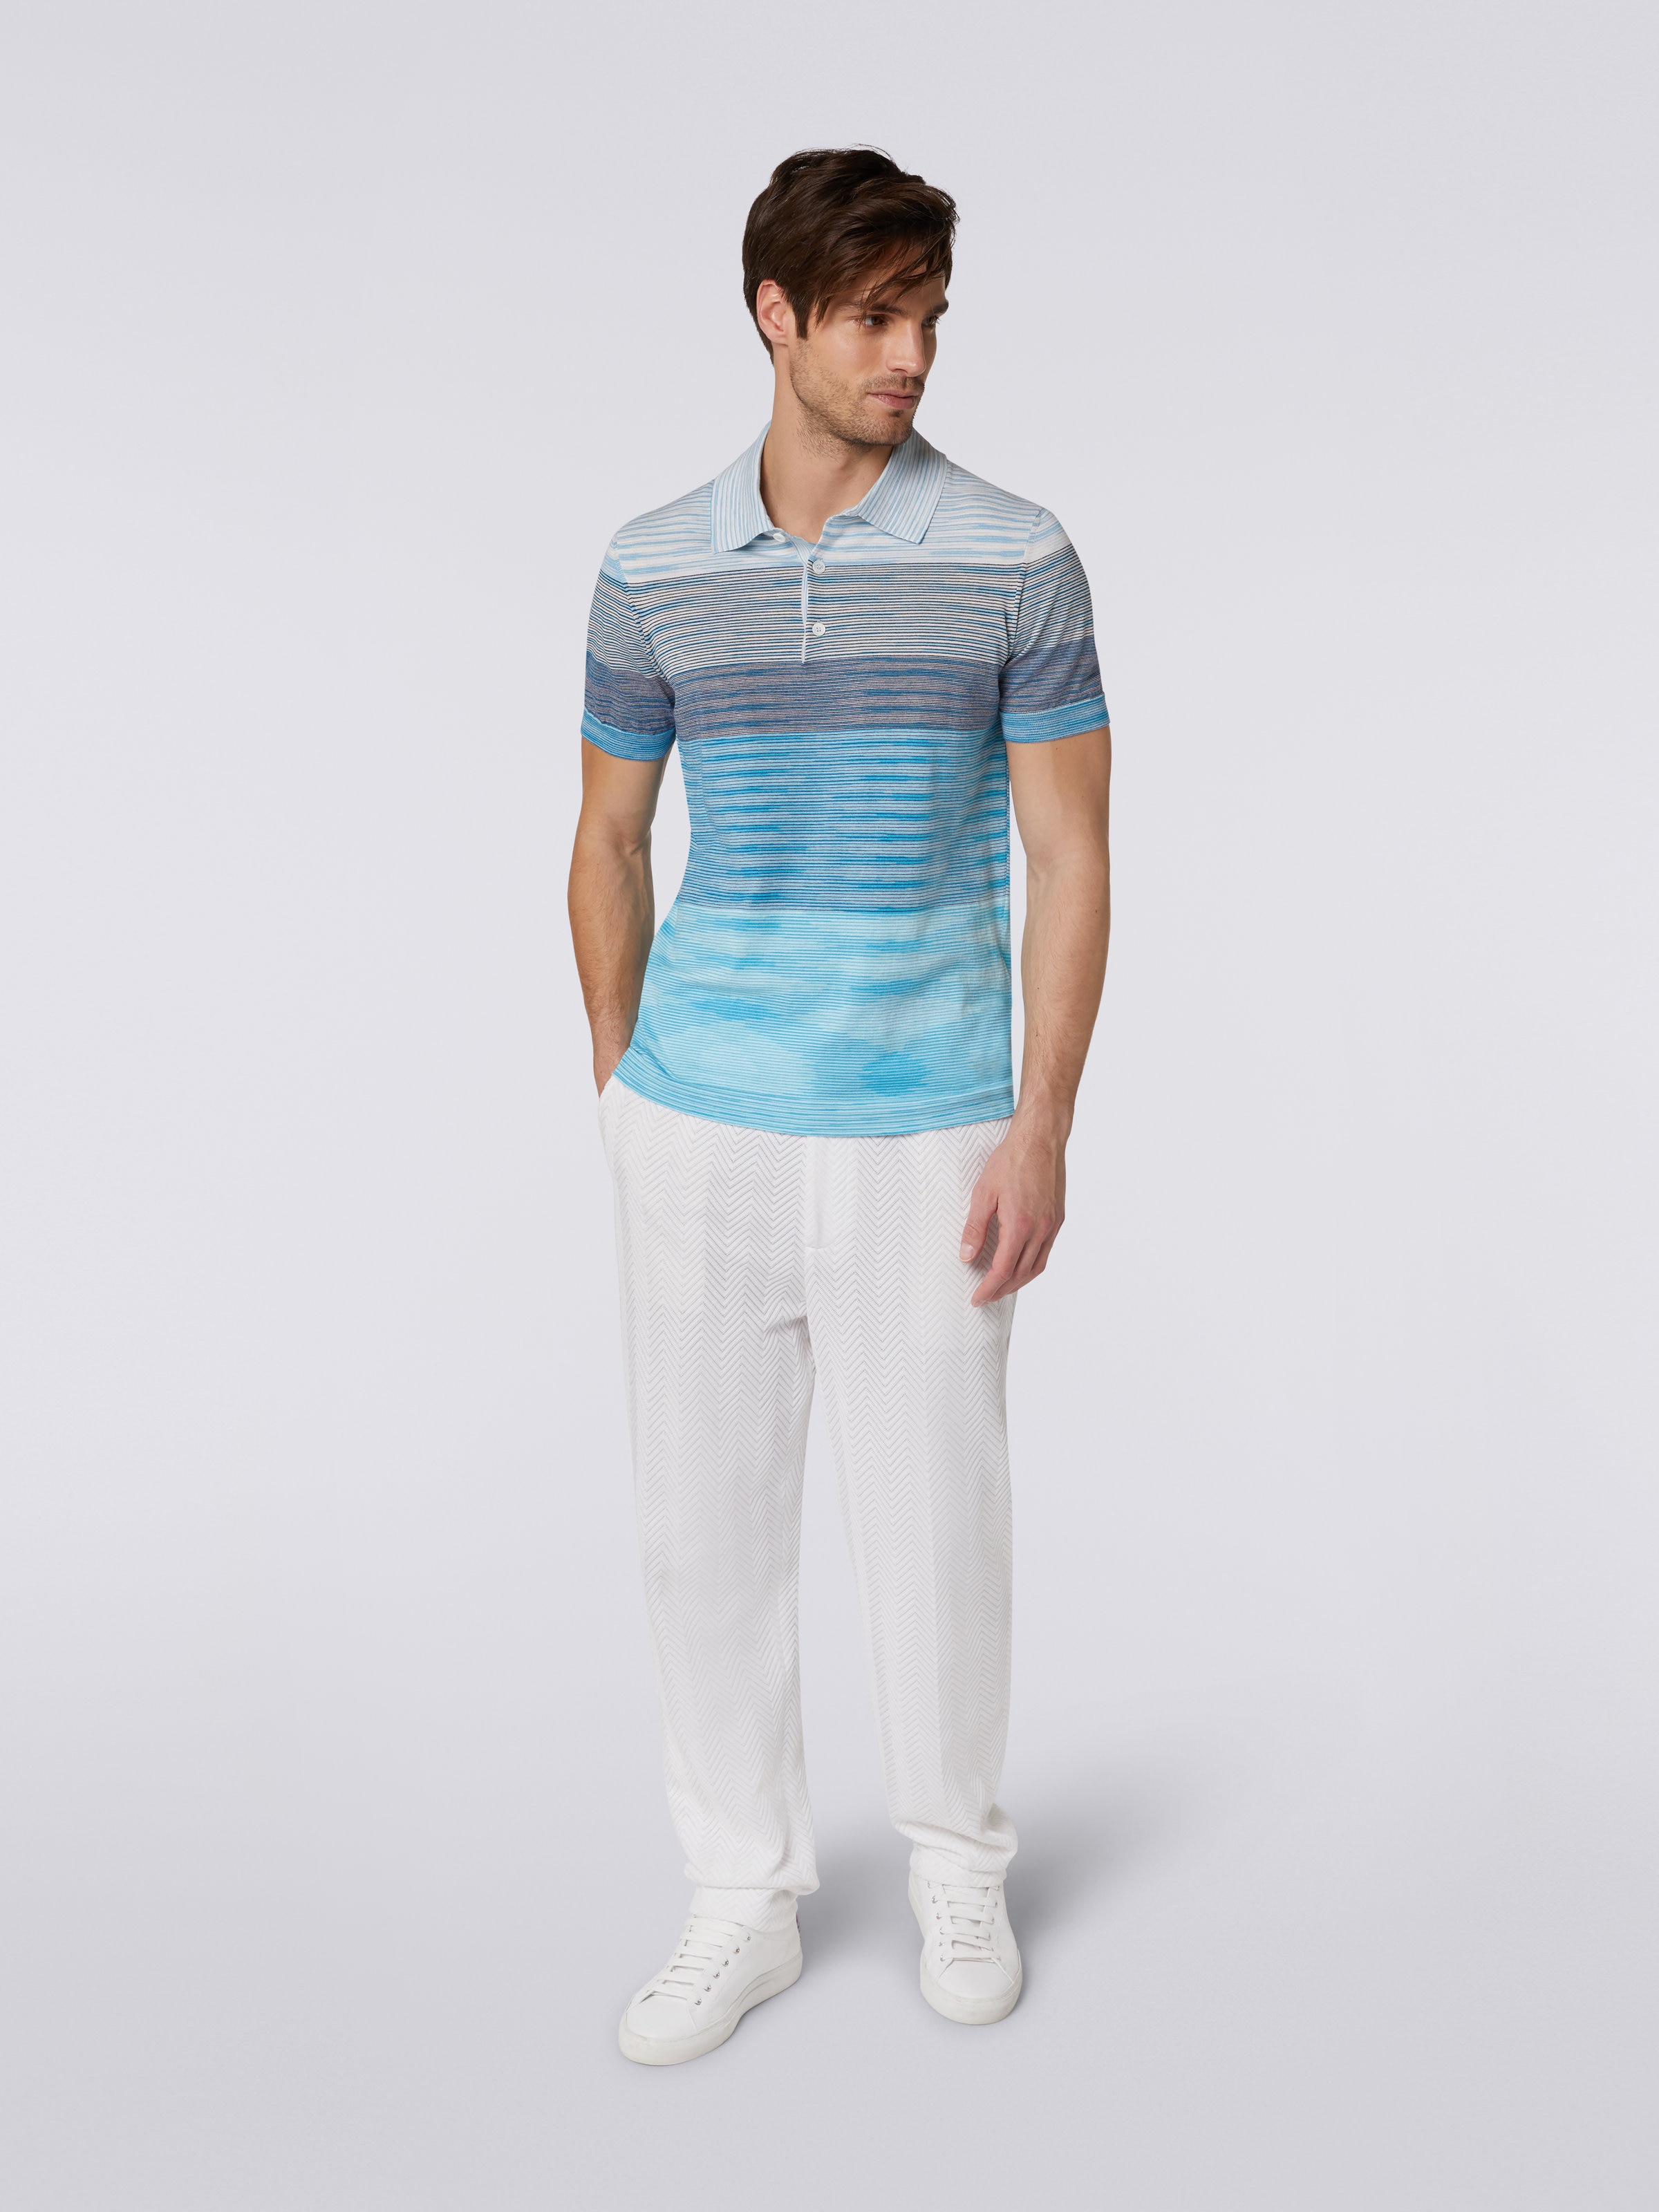 Kurzärmeliges Poloshirt aus gestreifter Baumwolle mit Dégradé-Effekt, Weiß & Hellblau - 1